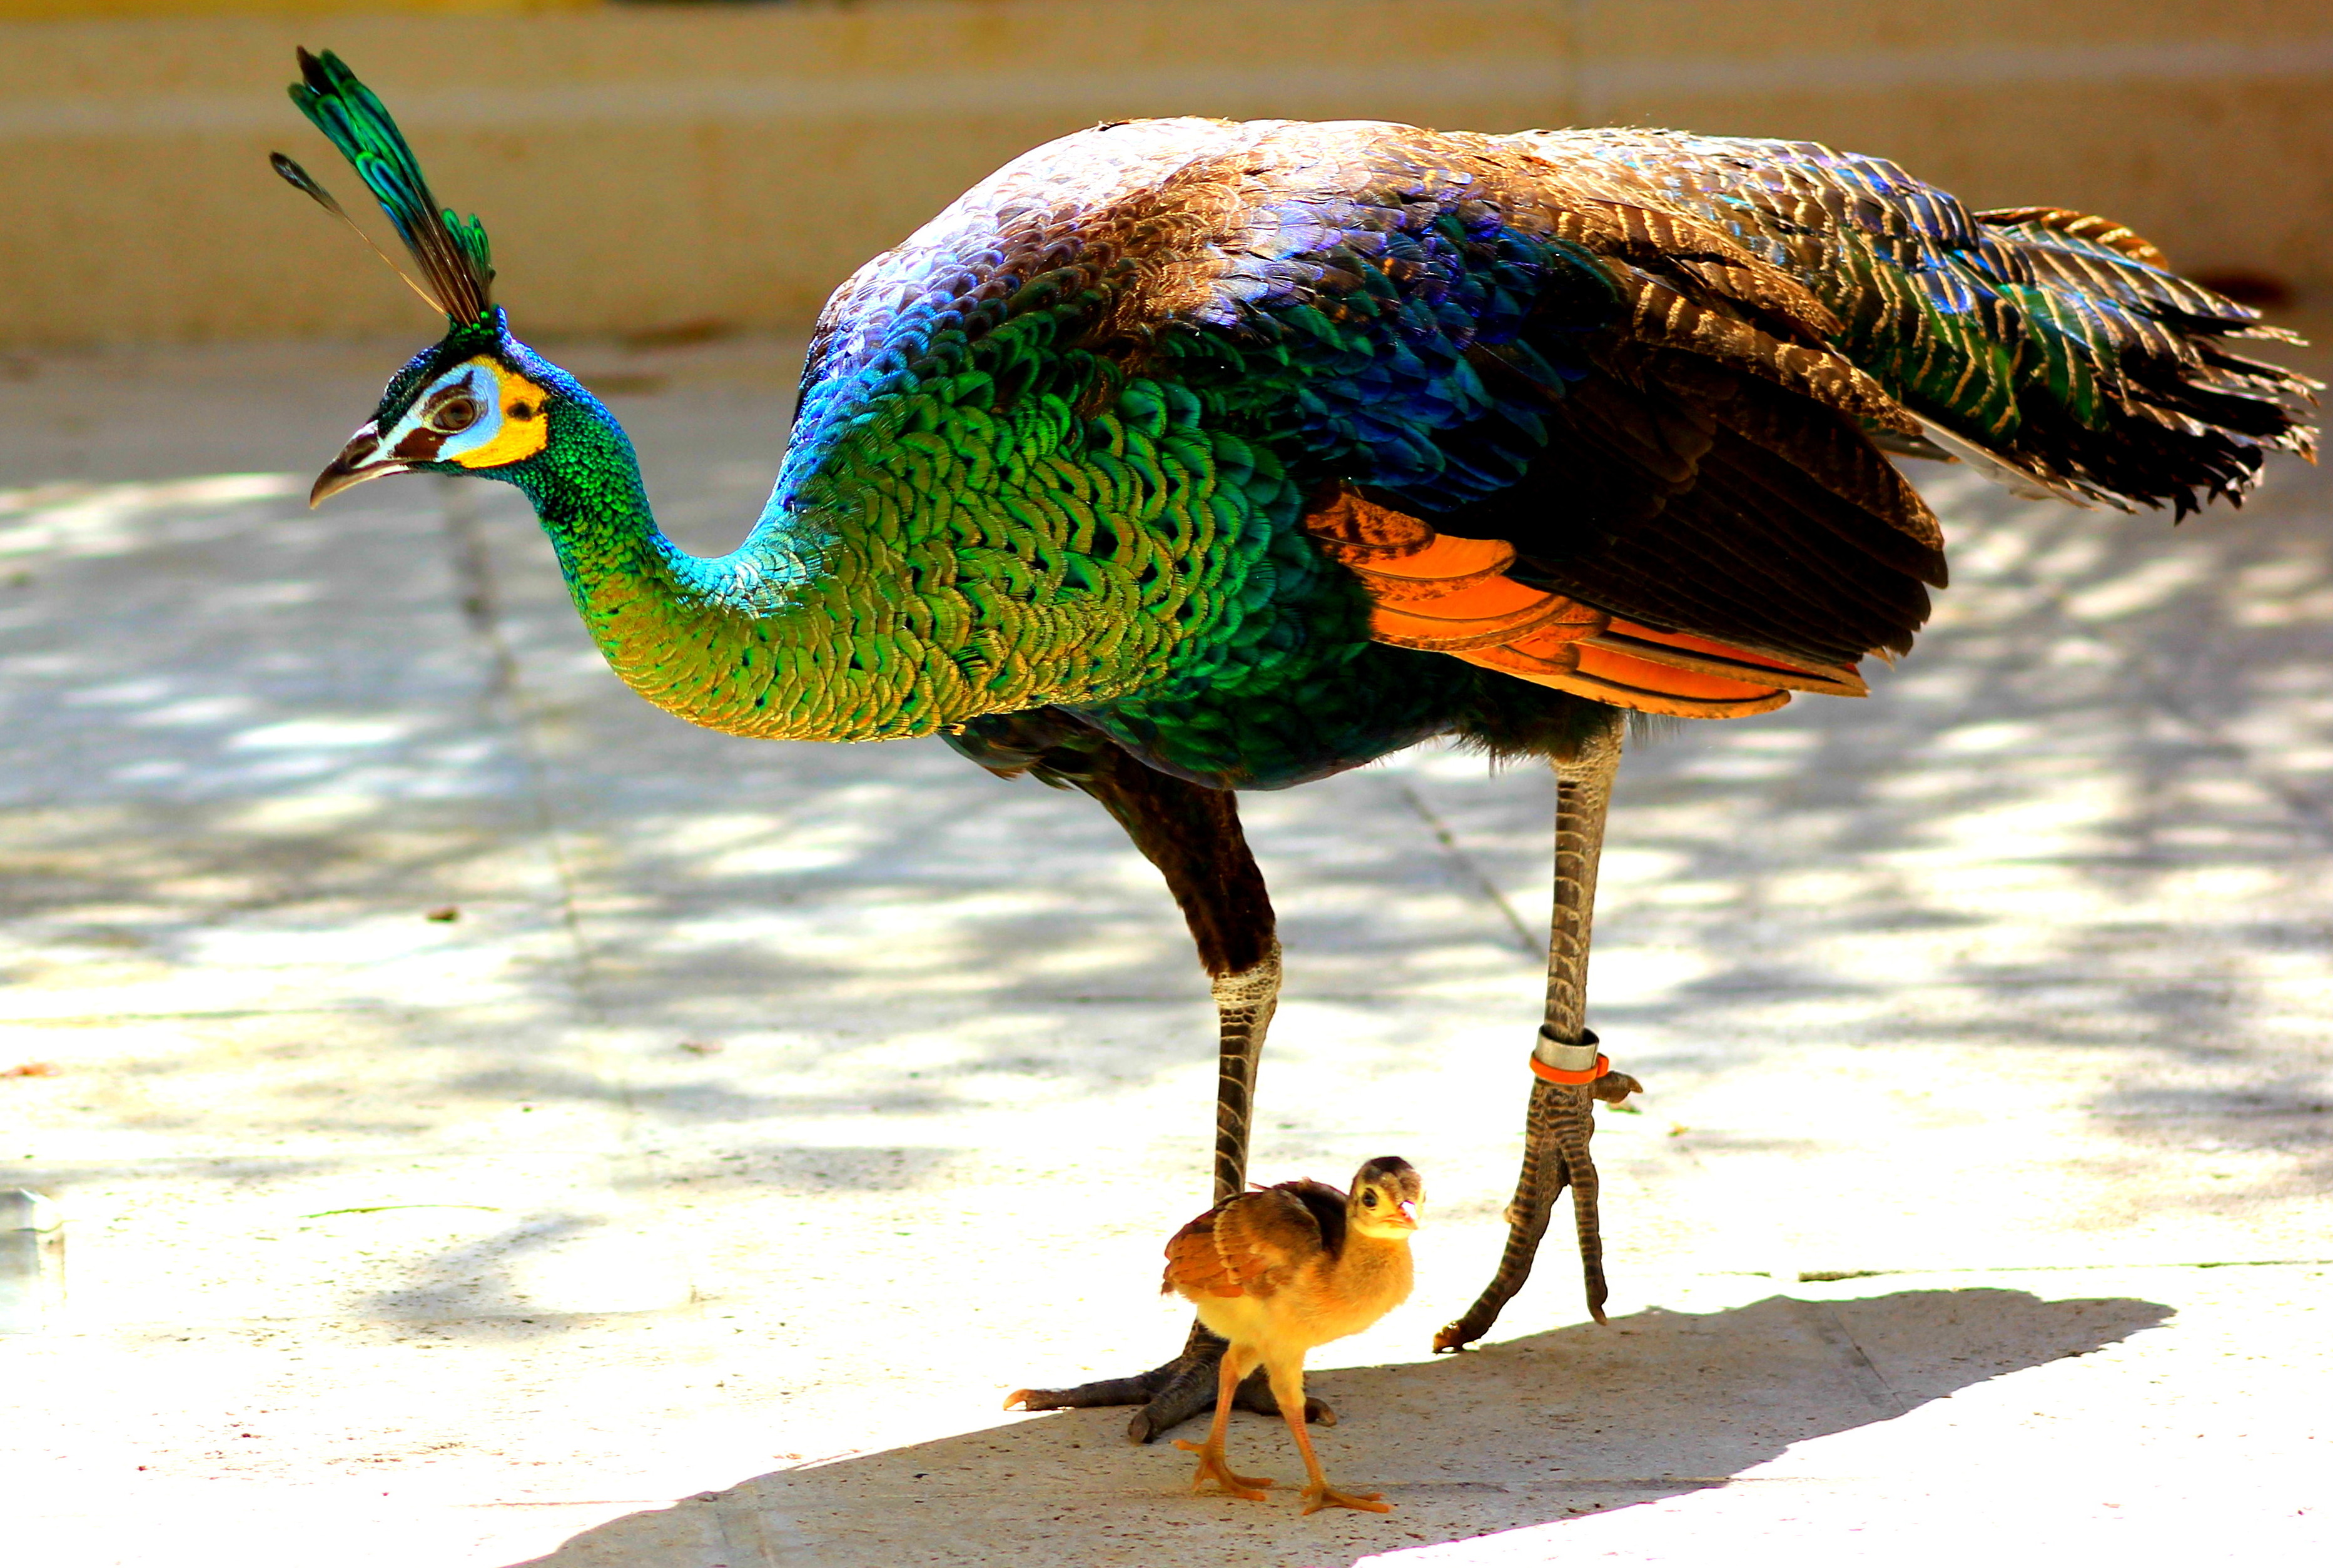 File:Ghi, pettingzoo (torso of escaped peacock - not school pecock!).jpg -  Wikimedia Commons